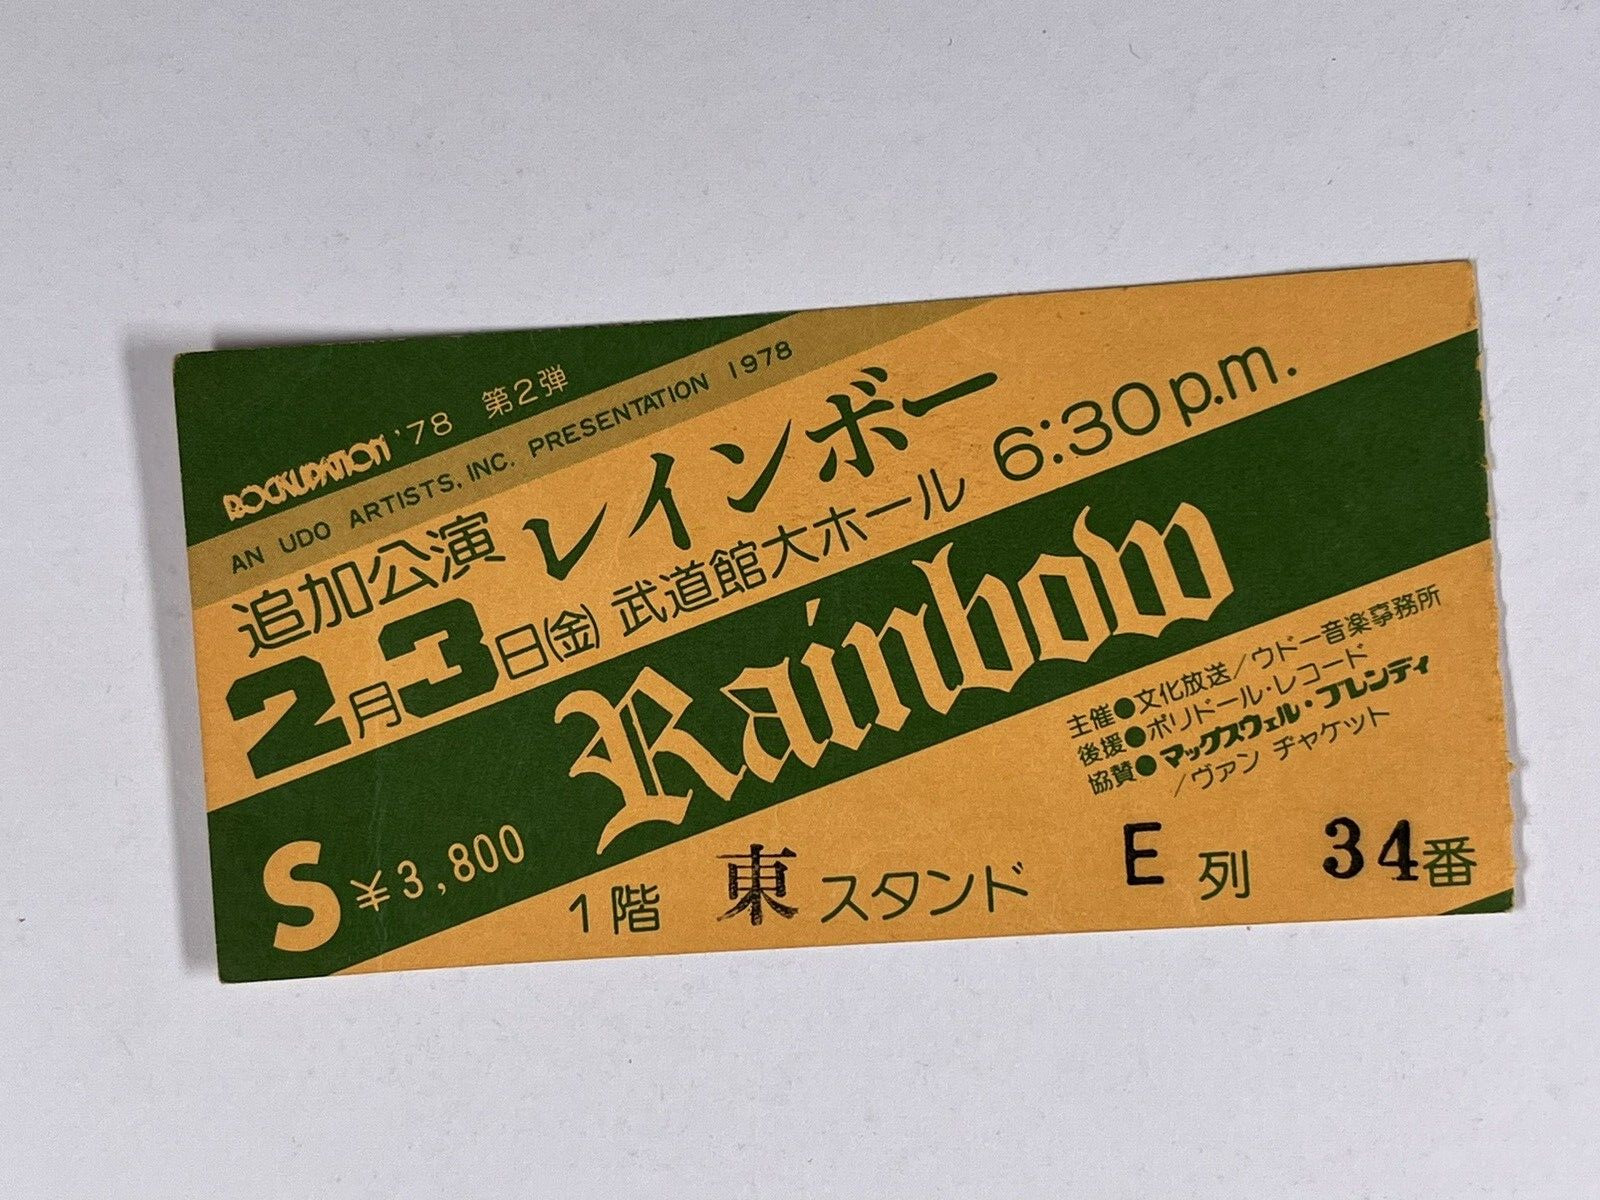 Rainbow Rockupation Ticket Ronnie Dio Ritchie Blackmore Original Japan 1978